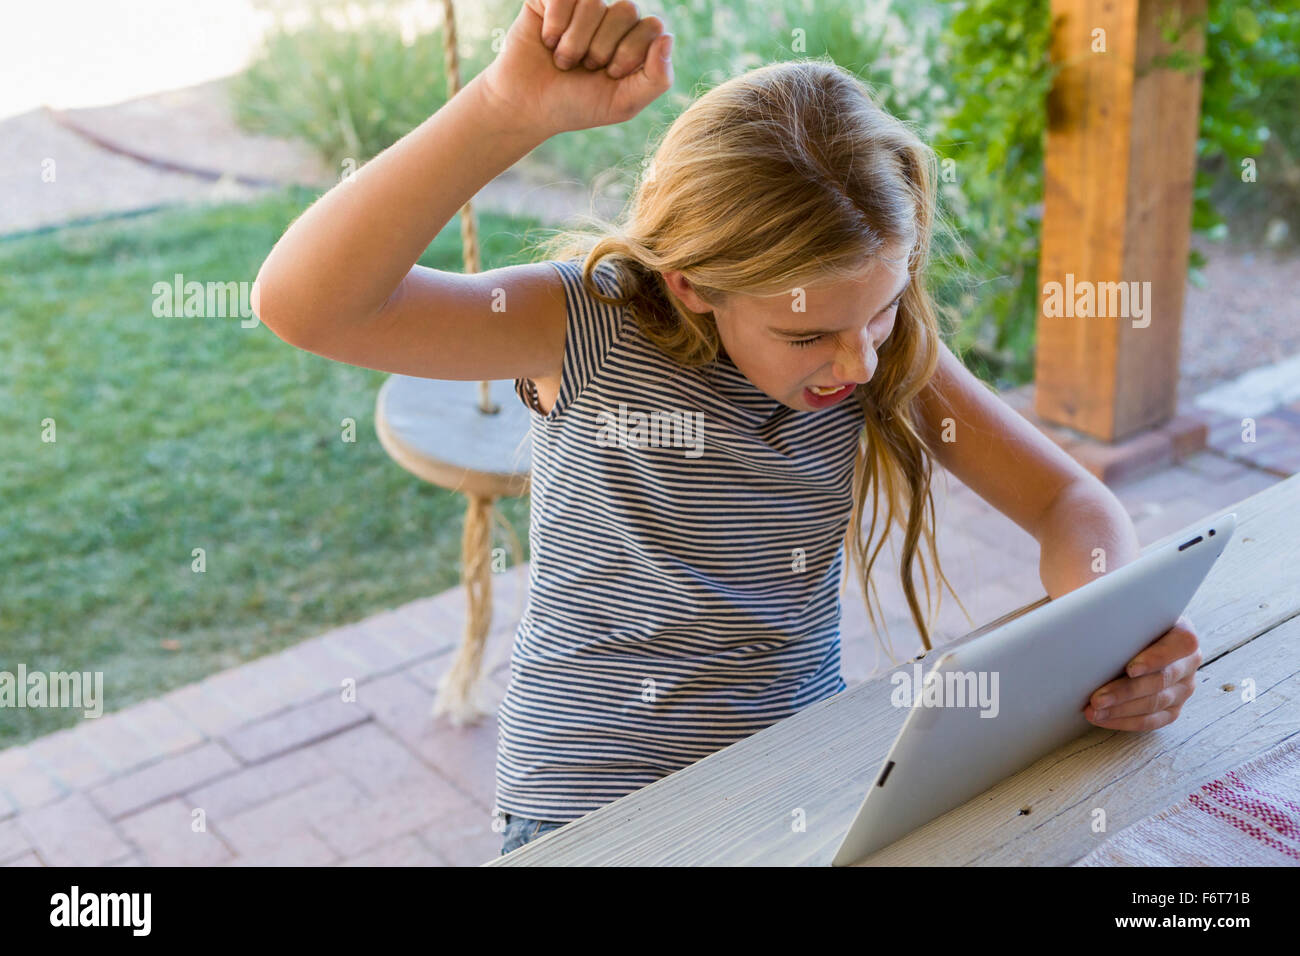 Woman cheering at digital tablet Banque D'Images